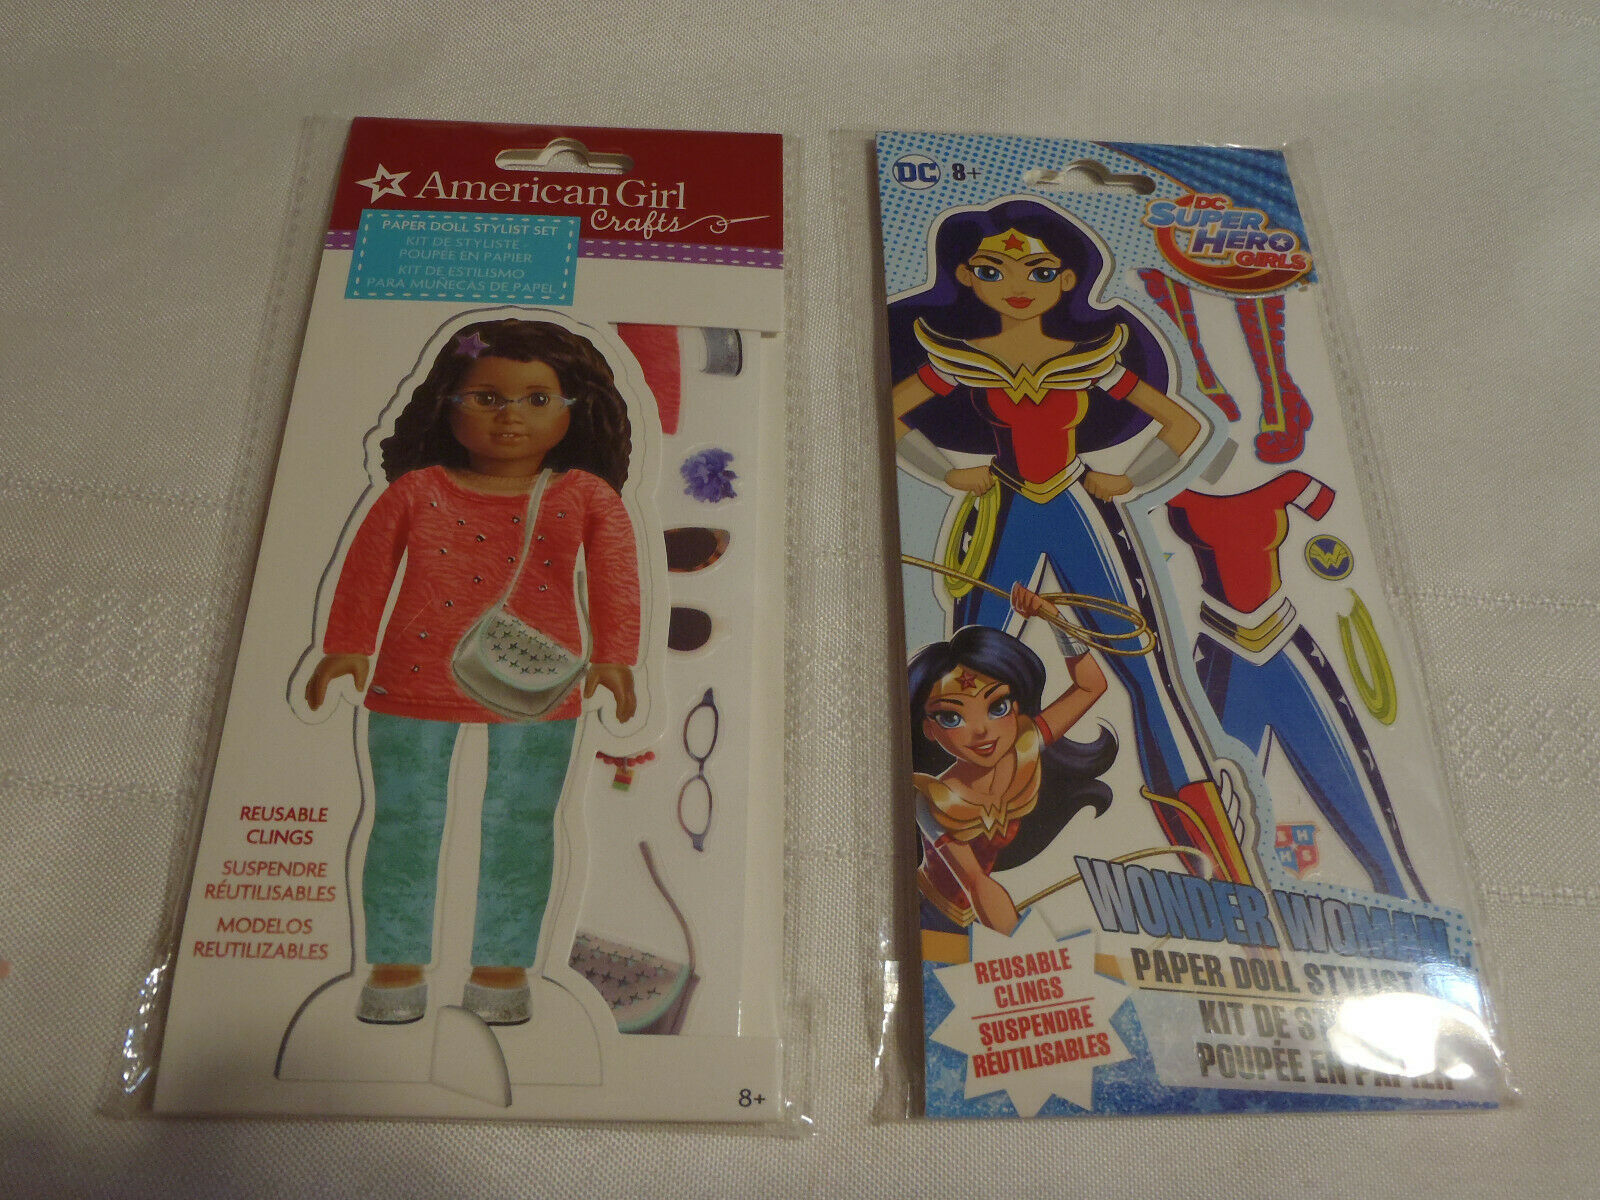 Reusable Clings Paper Dolls Stylist Set Nip Wonder Woman American Girl